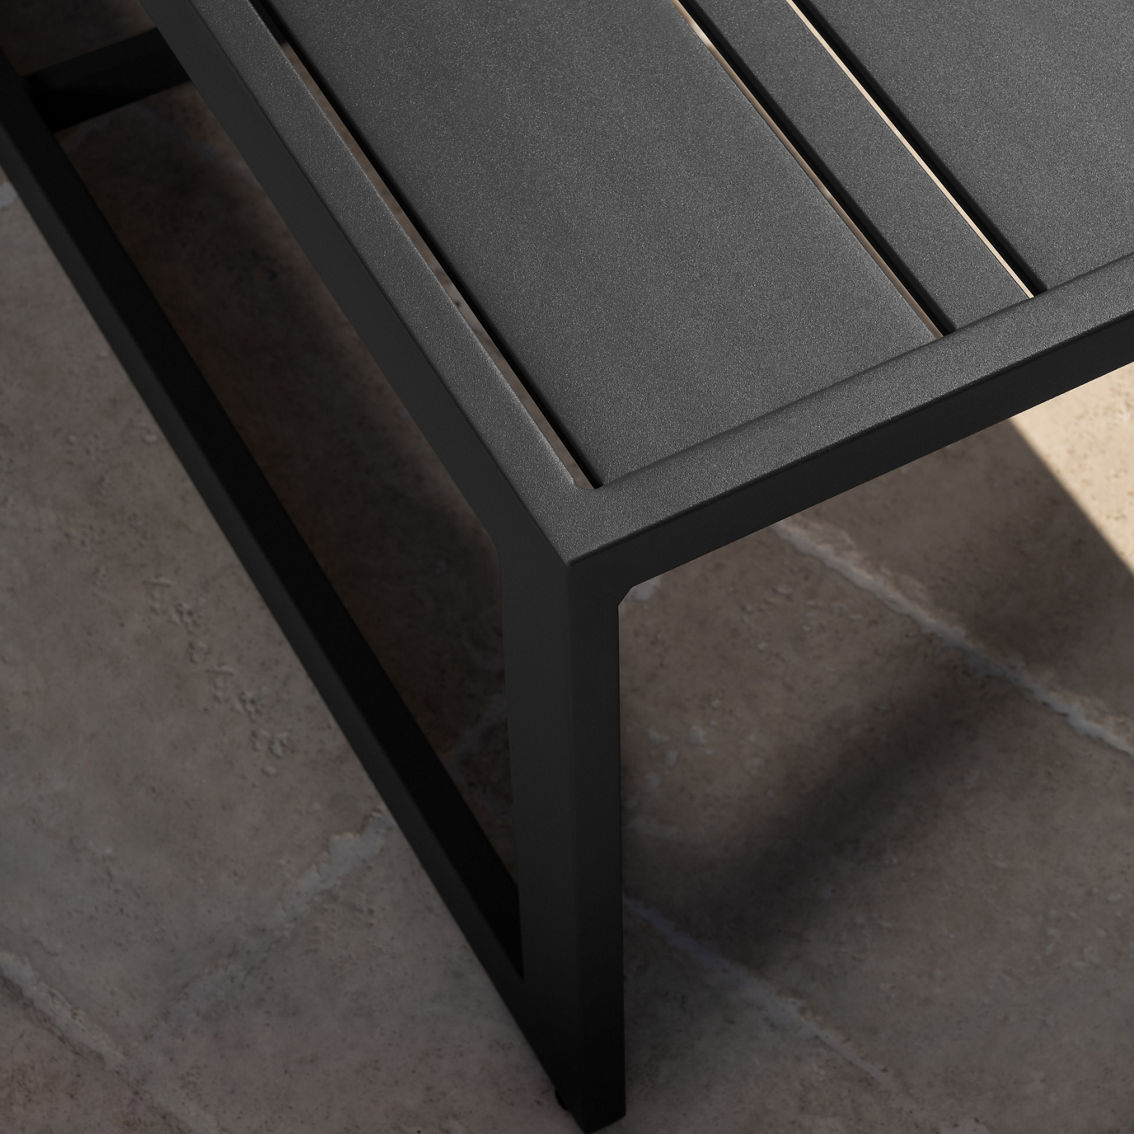 Abbyson Tori Outdoor 3-pc Nesting Table Set, White Fabric & Black Frame - Image 5 of 5